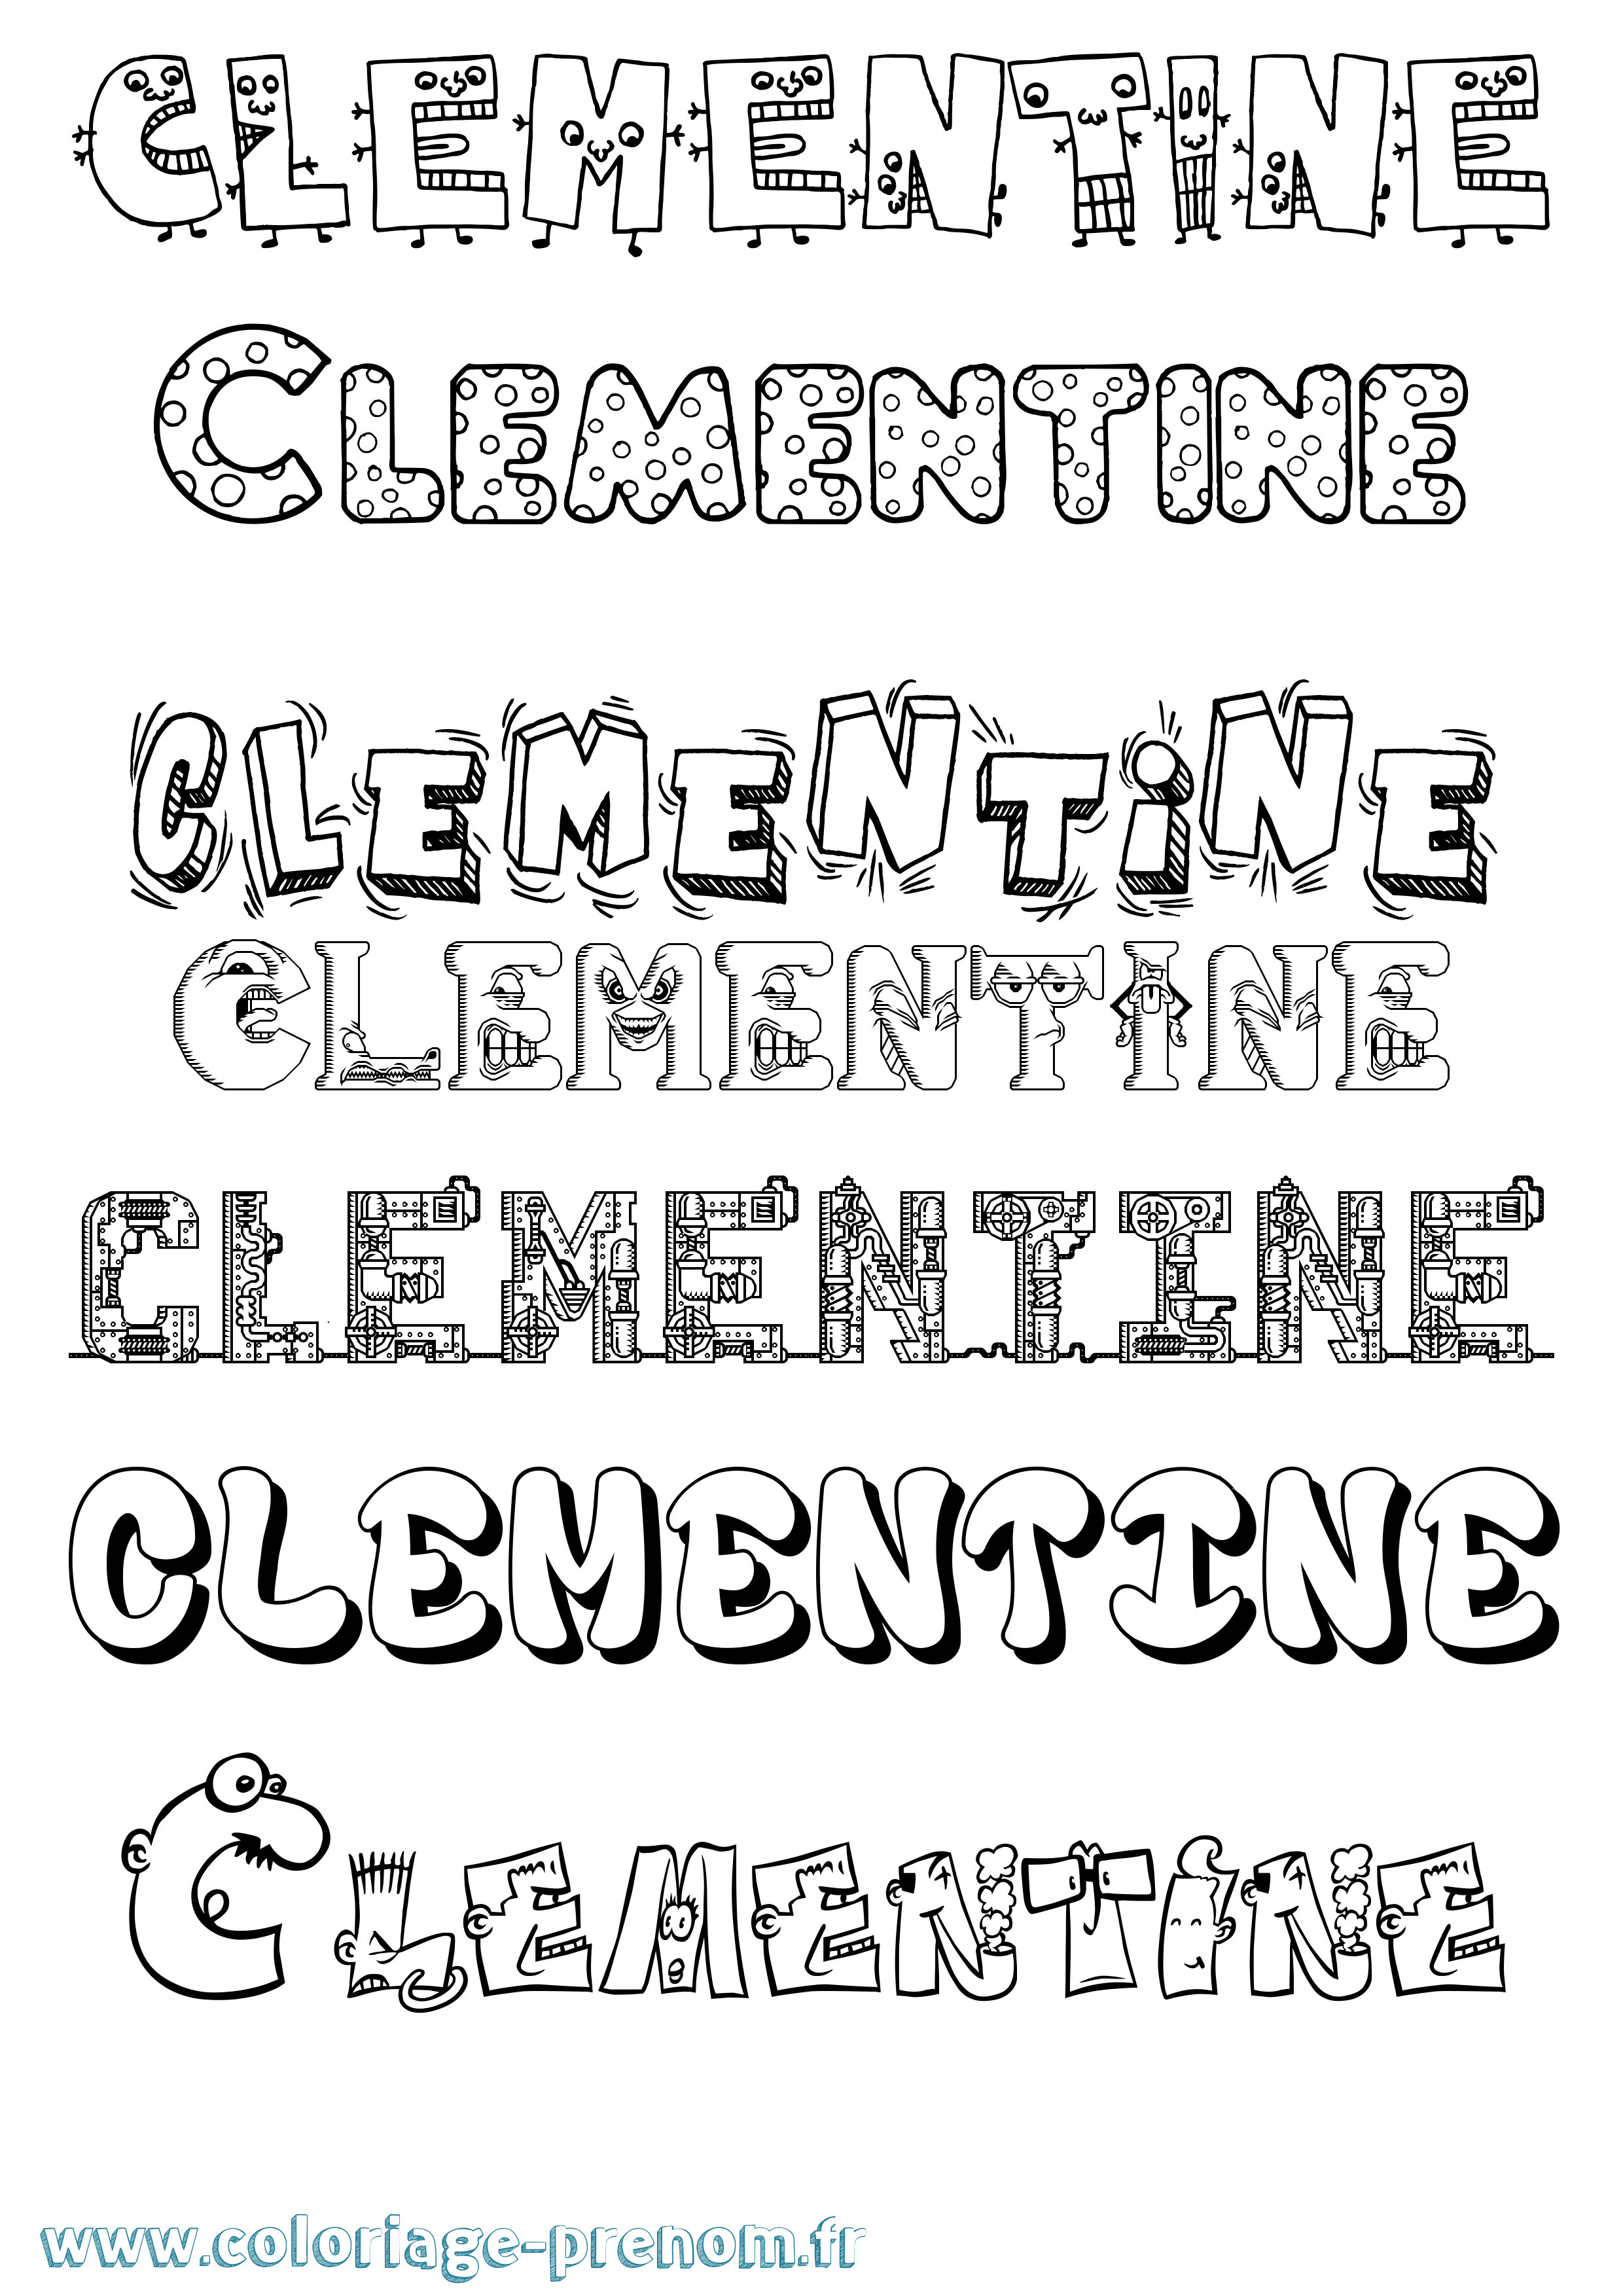 Coloriage prénom Clementine Fun